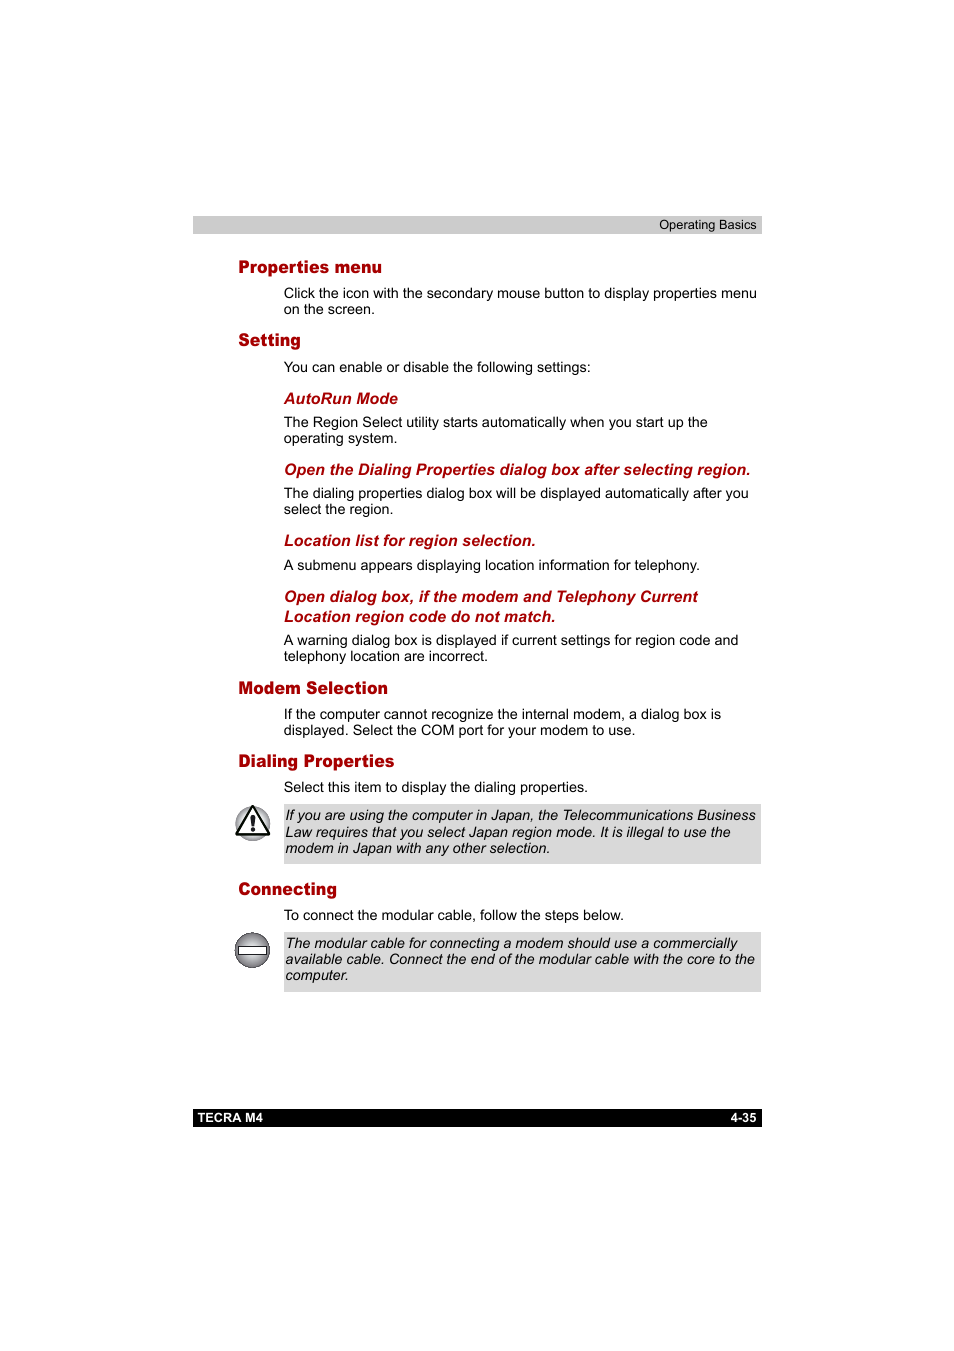 Properties menu, Setting, Modem selection | Dialing properties, Connecting | Toshiba Tecra M4 User Manual | Page 107 / 237